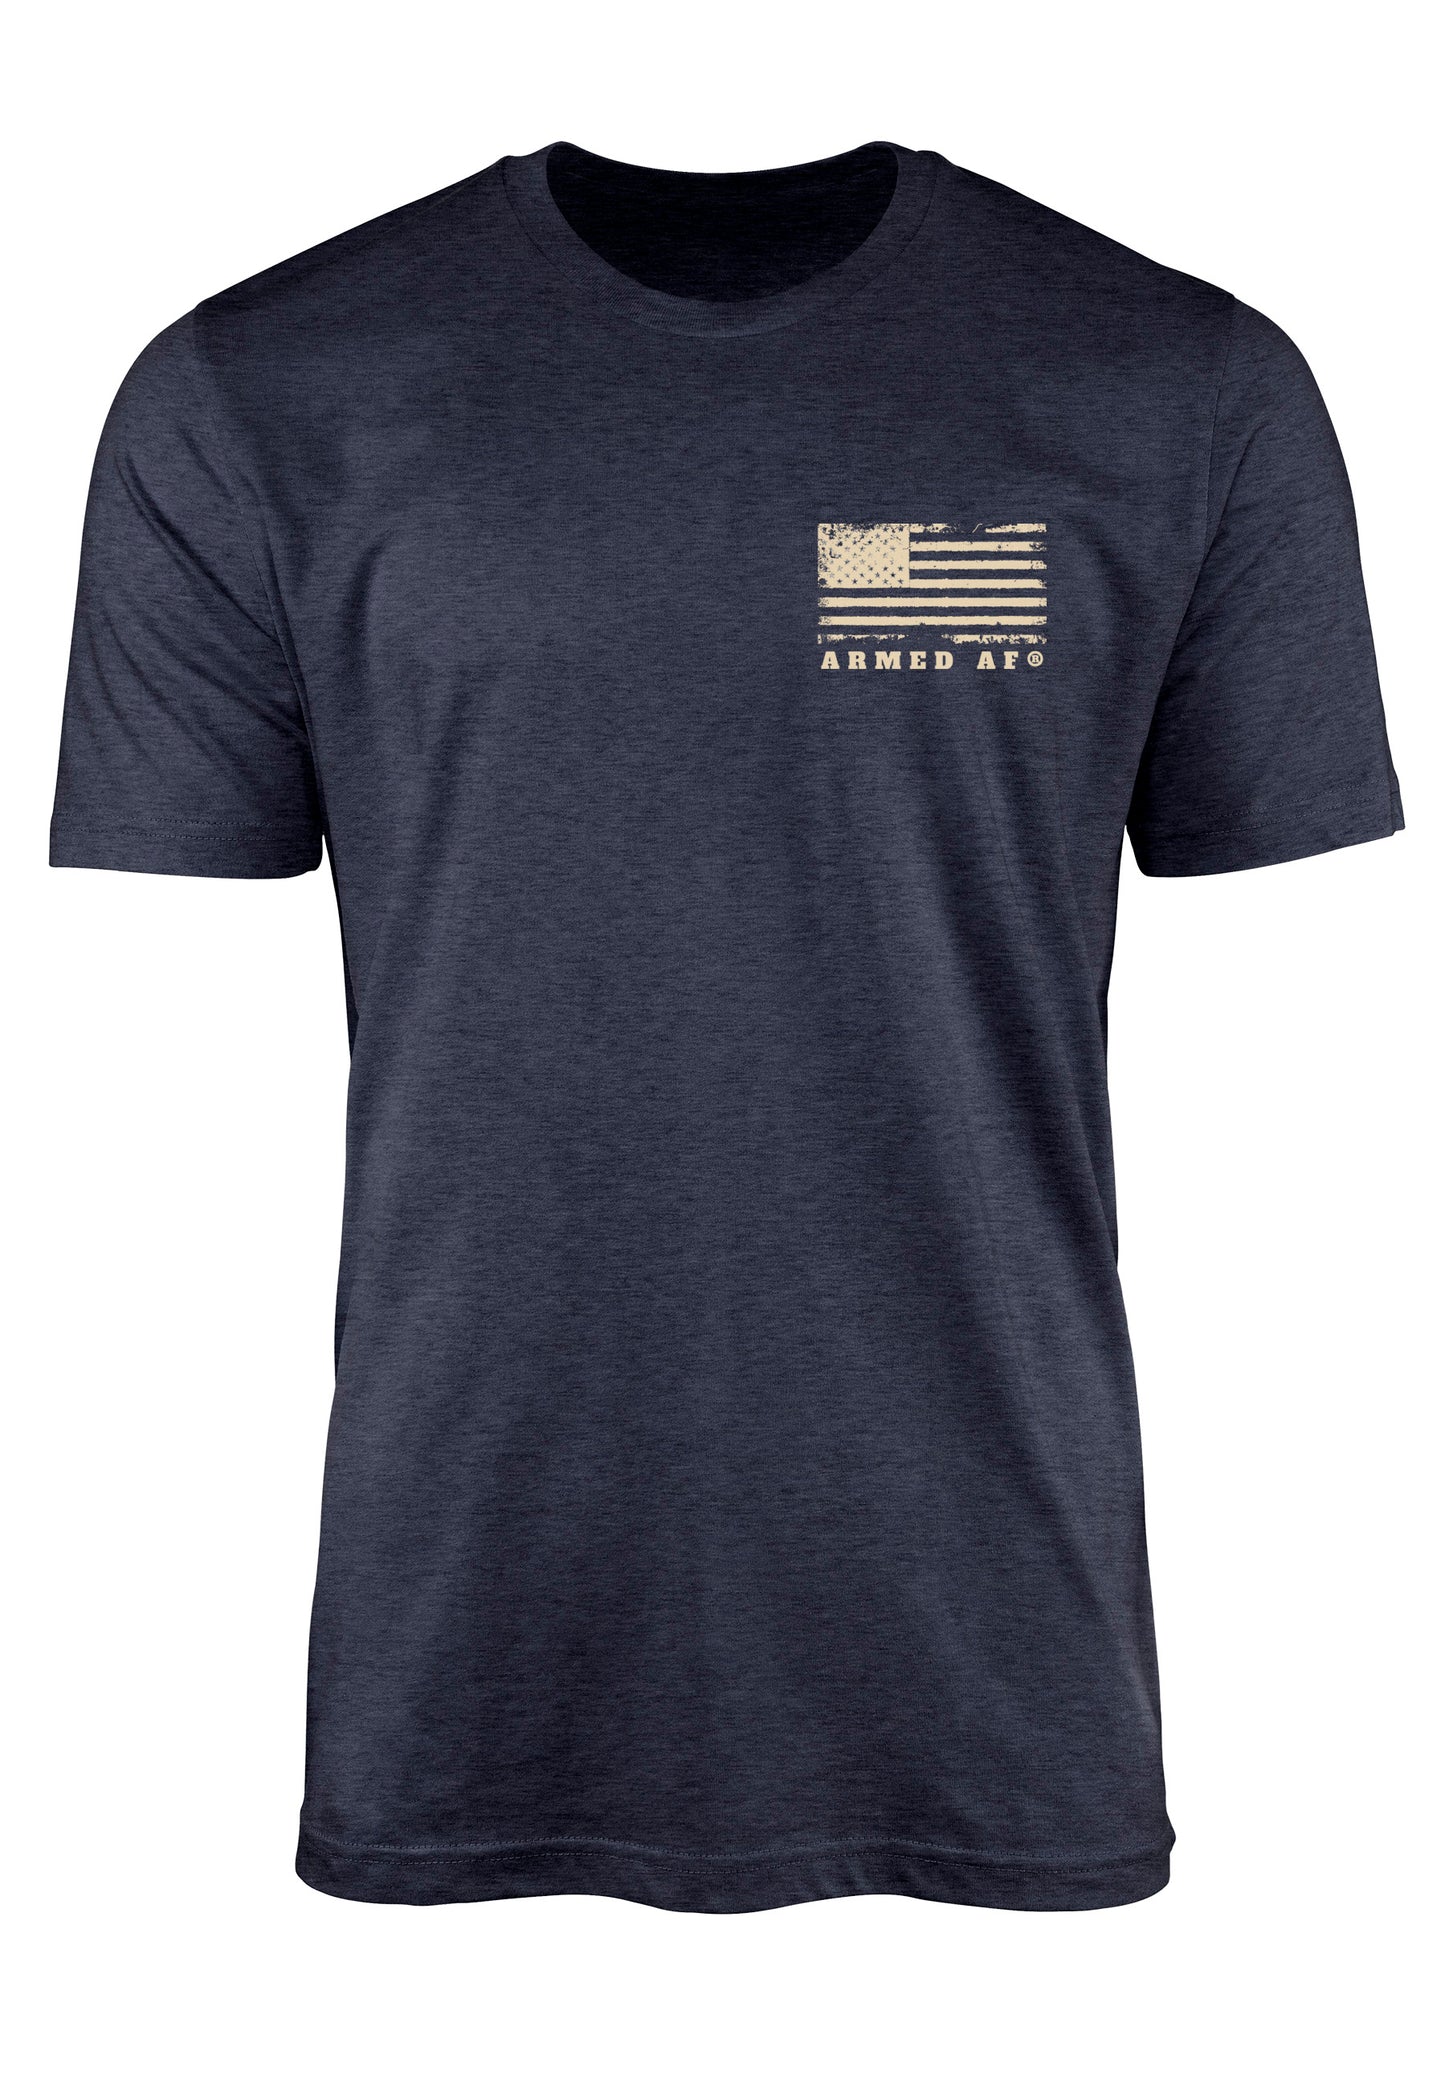 ArmedAF® chest print on t-shirt